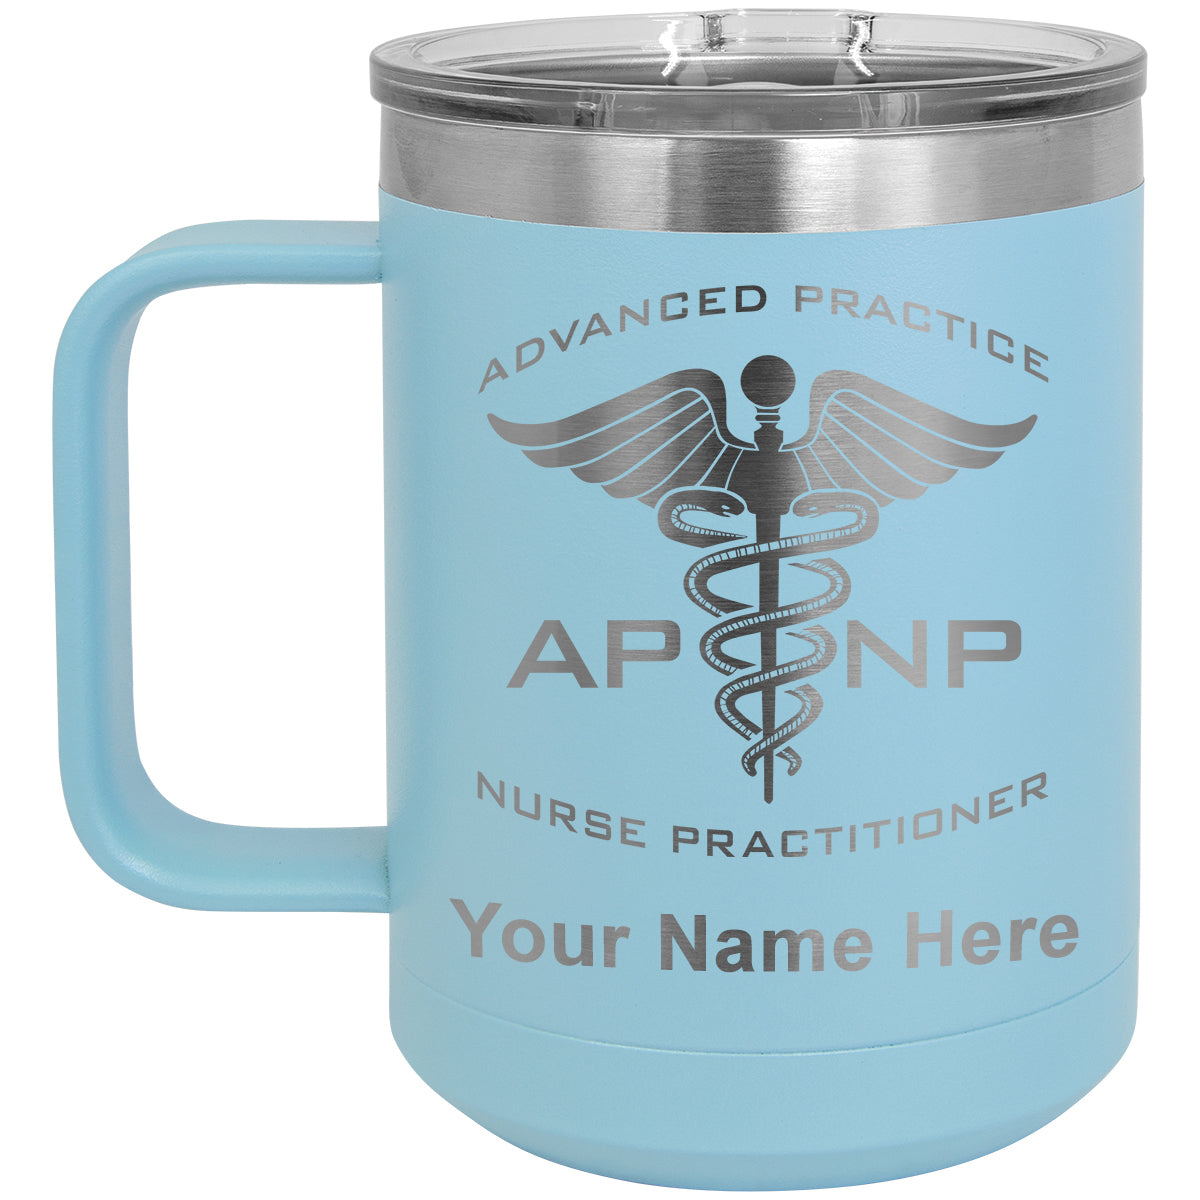 15oz Vacuum Insulated Coffee Mug, APNP Advanced Practice Nurse Practitioner, Personalized Engraving Included